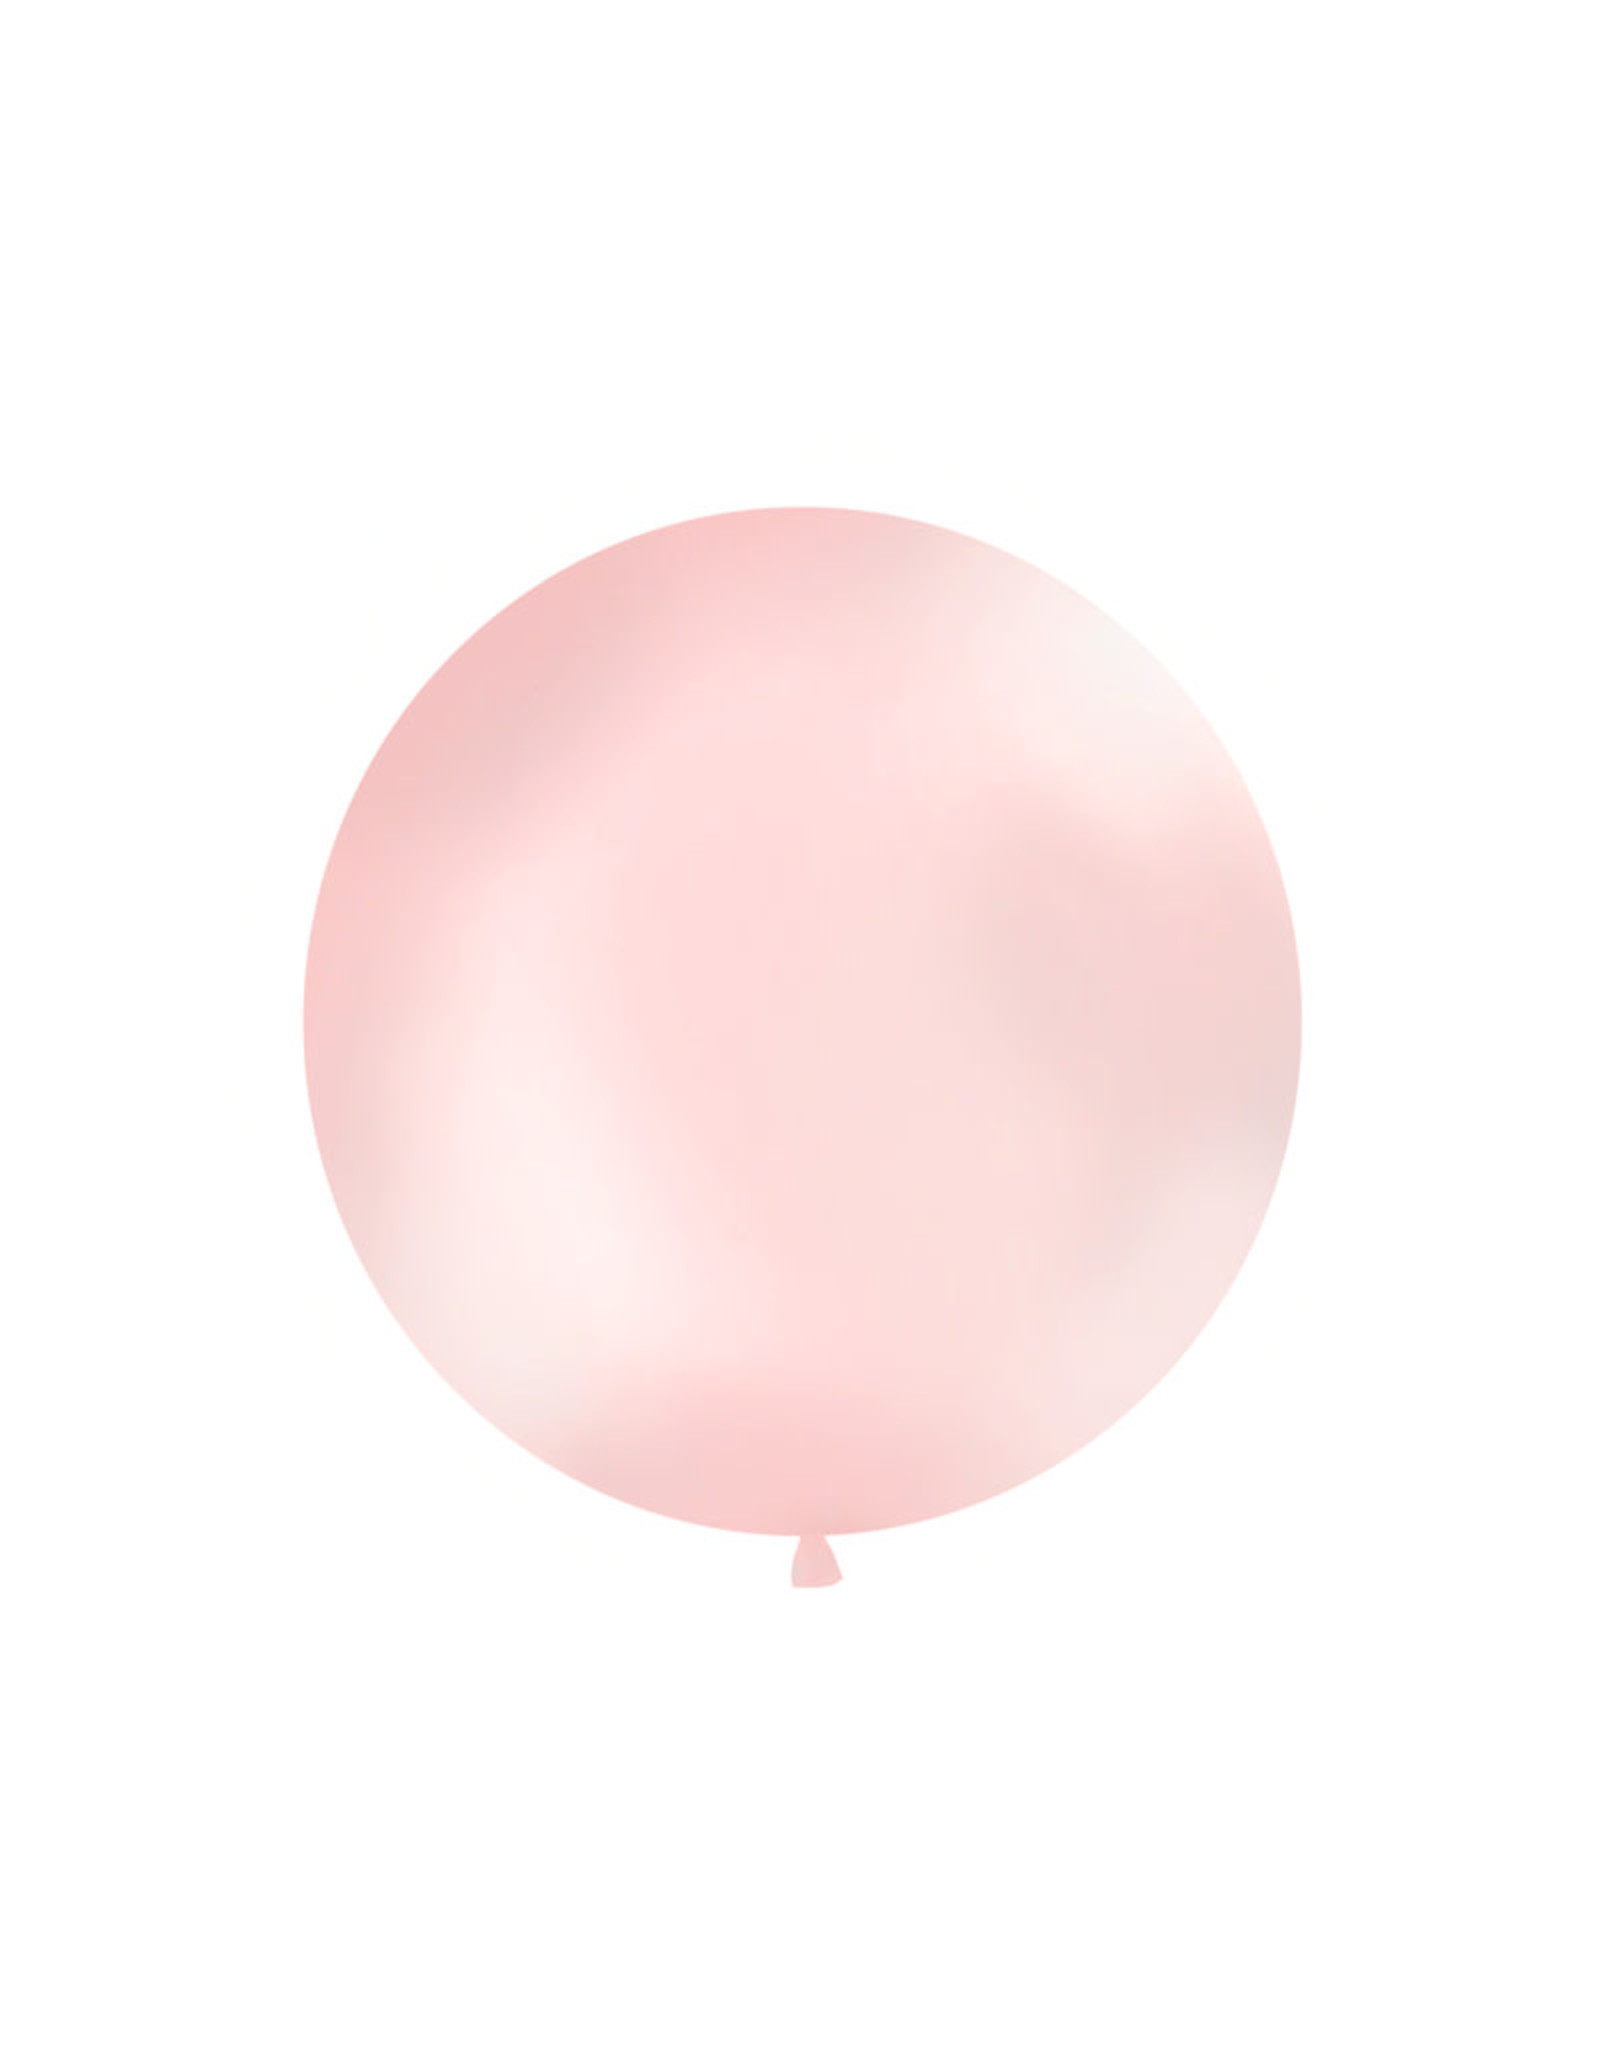 XXL ballon candy pink metallic 1 meter